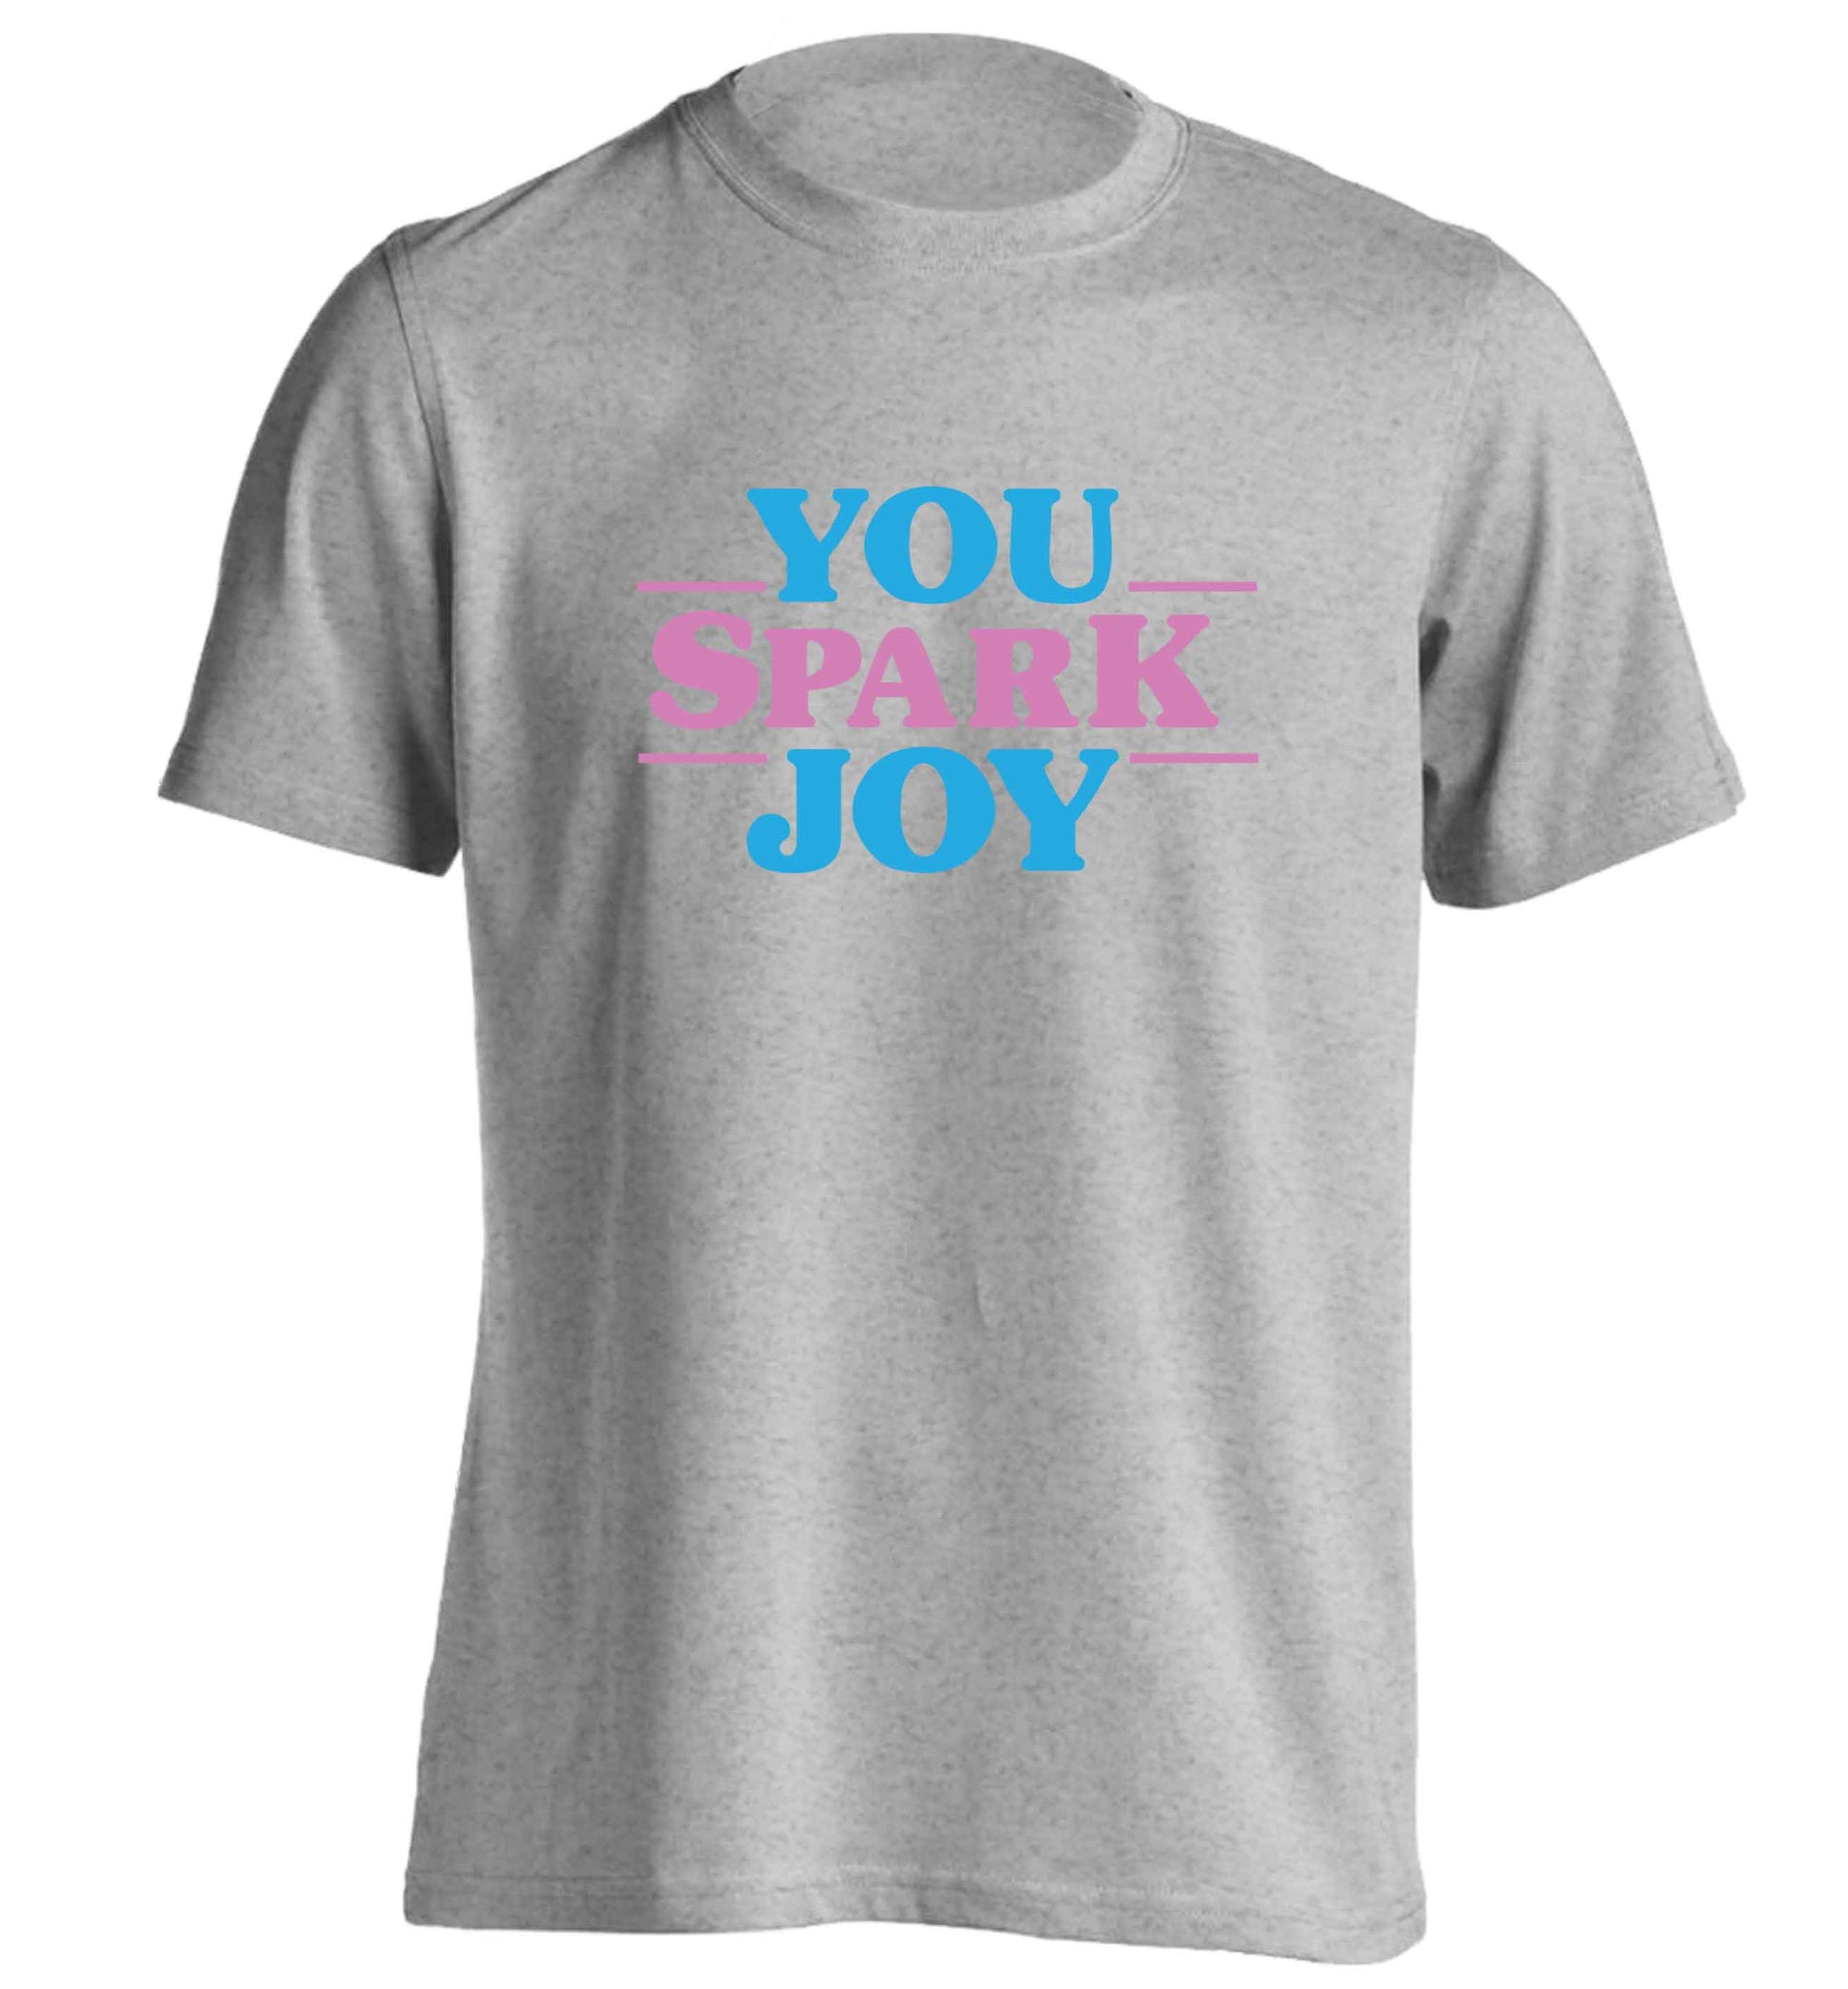 You spark joy adults unisex grey Tshirt 2XL